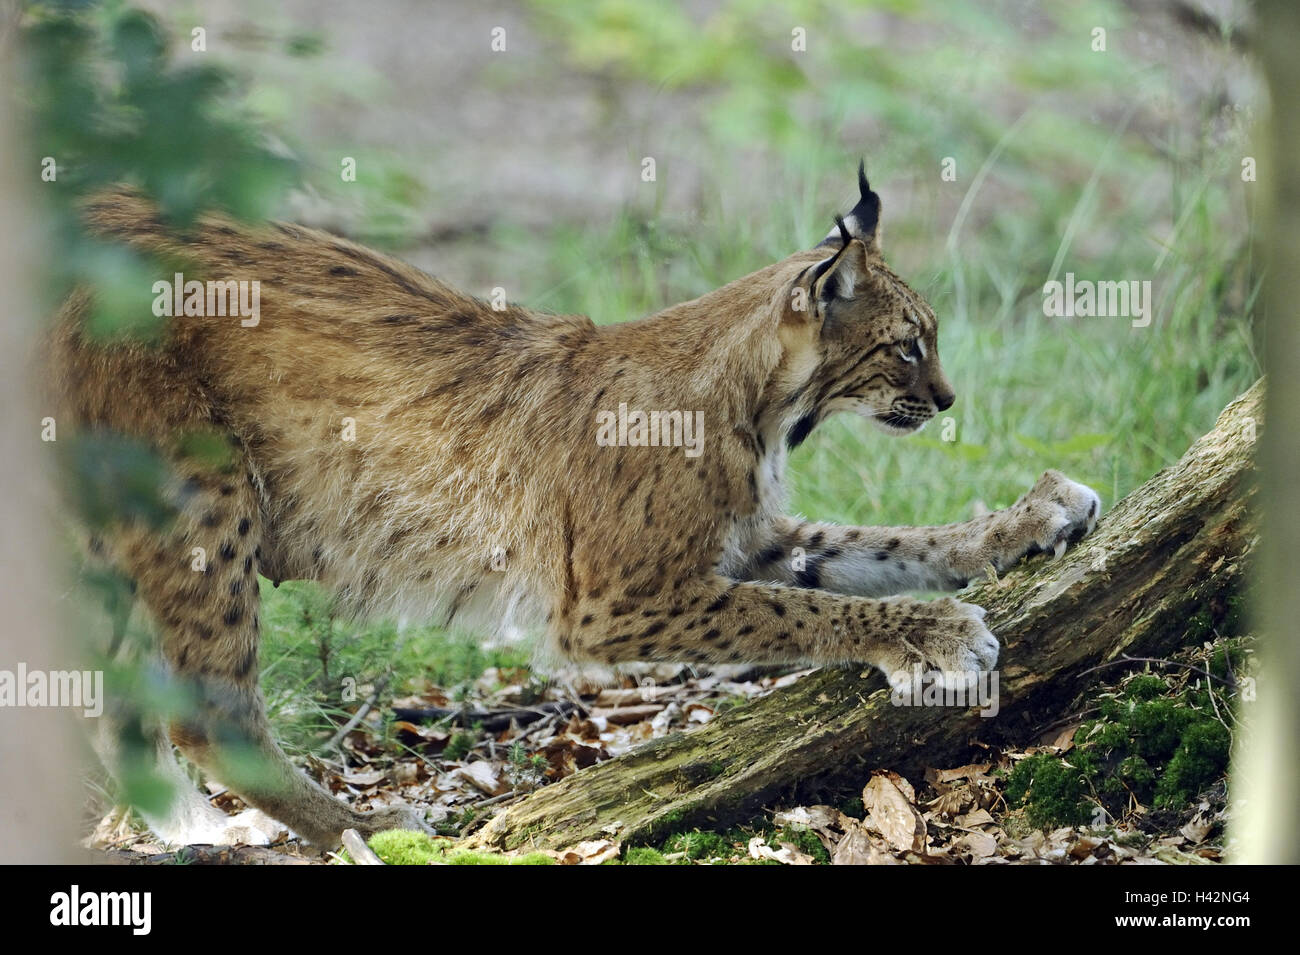 Rock, Carpathian Mts lynx, Lynx carpathicus, claws, trunk, race, animal, mammal, predator, zoo animal, zoo, Carpathian Mts lynx, lynx, side view, Stock Photo